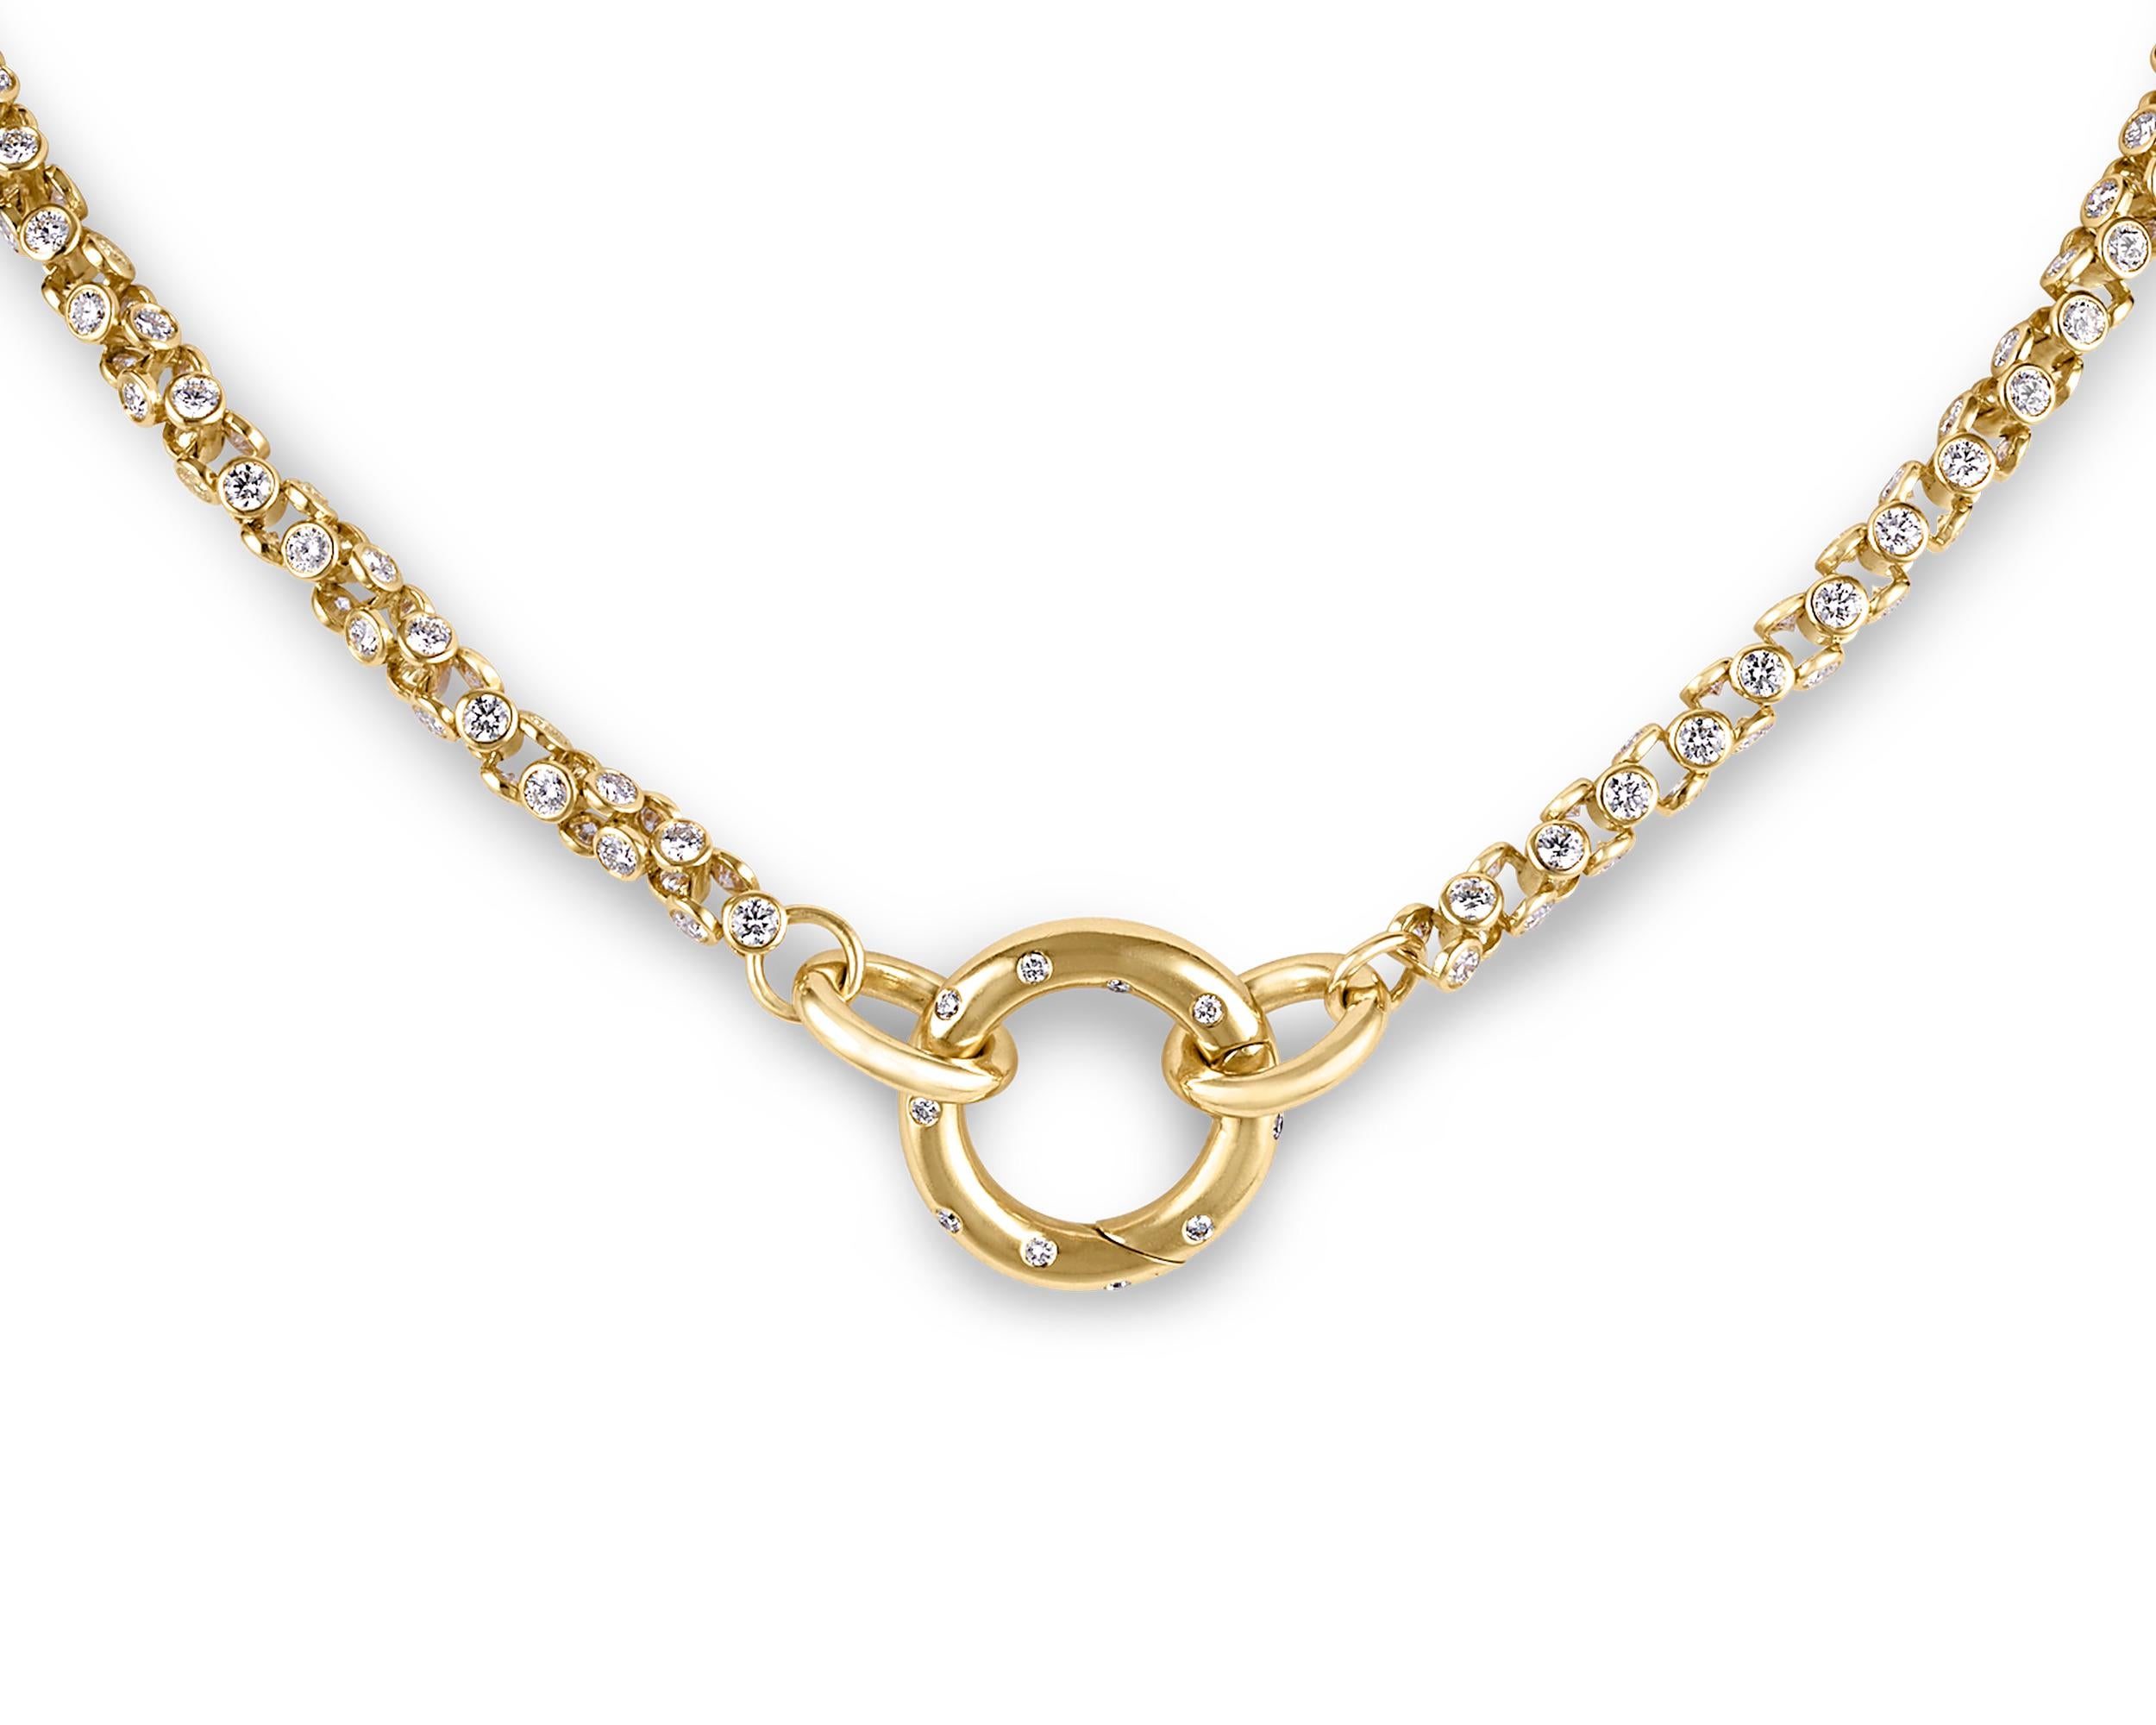 Round Cut Gold and Diamond Link Necklace by Oscar Heyman